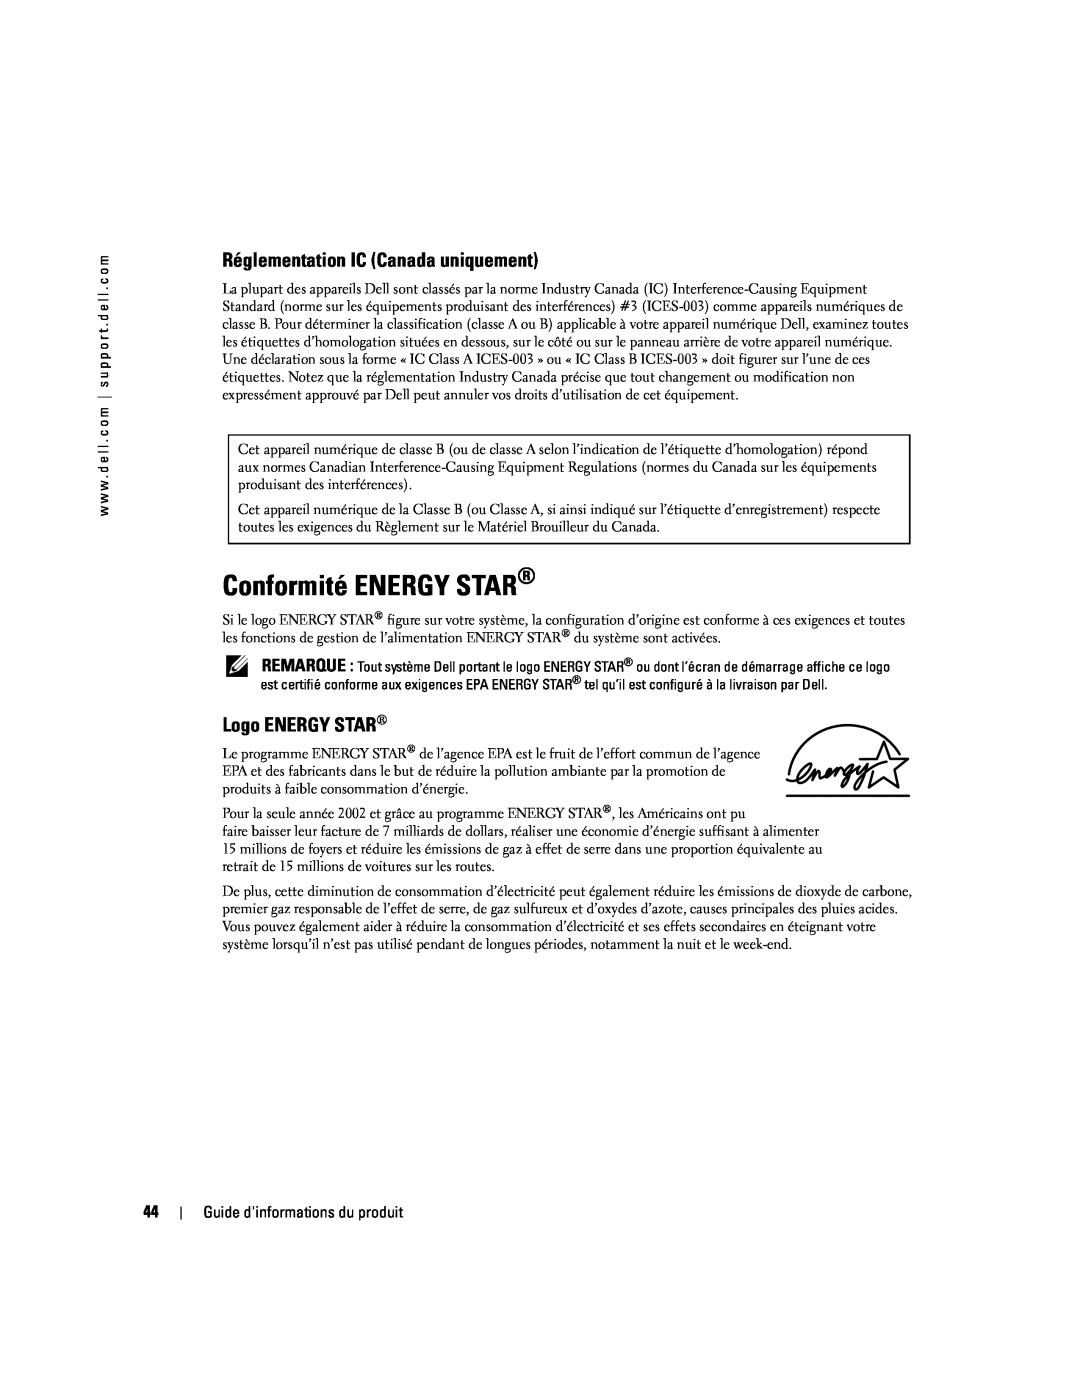 Dell W4200 manual Conformité ENERGY STAR, Réglementation IC Canada uniquement, Logo ENERGY STAR 